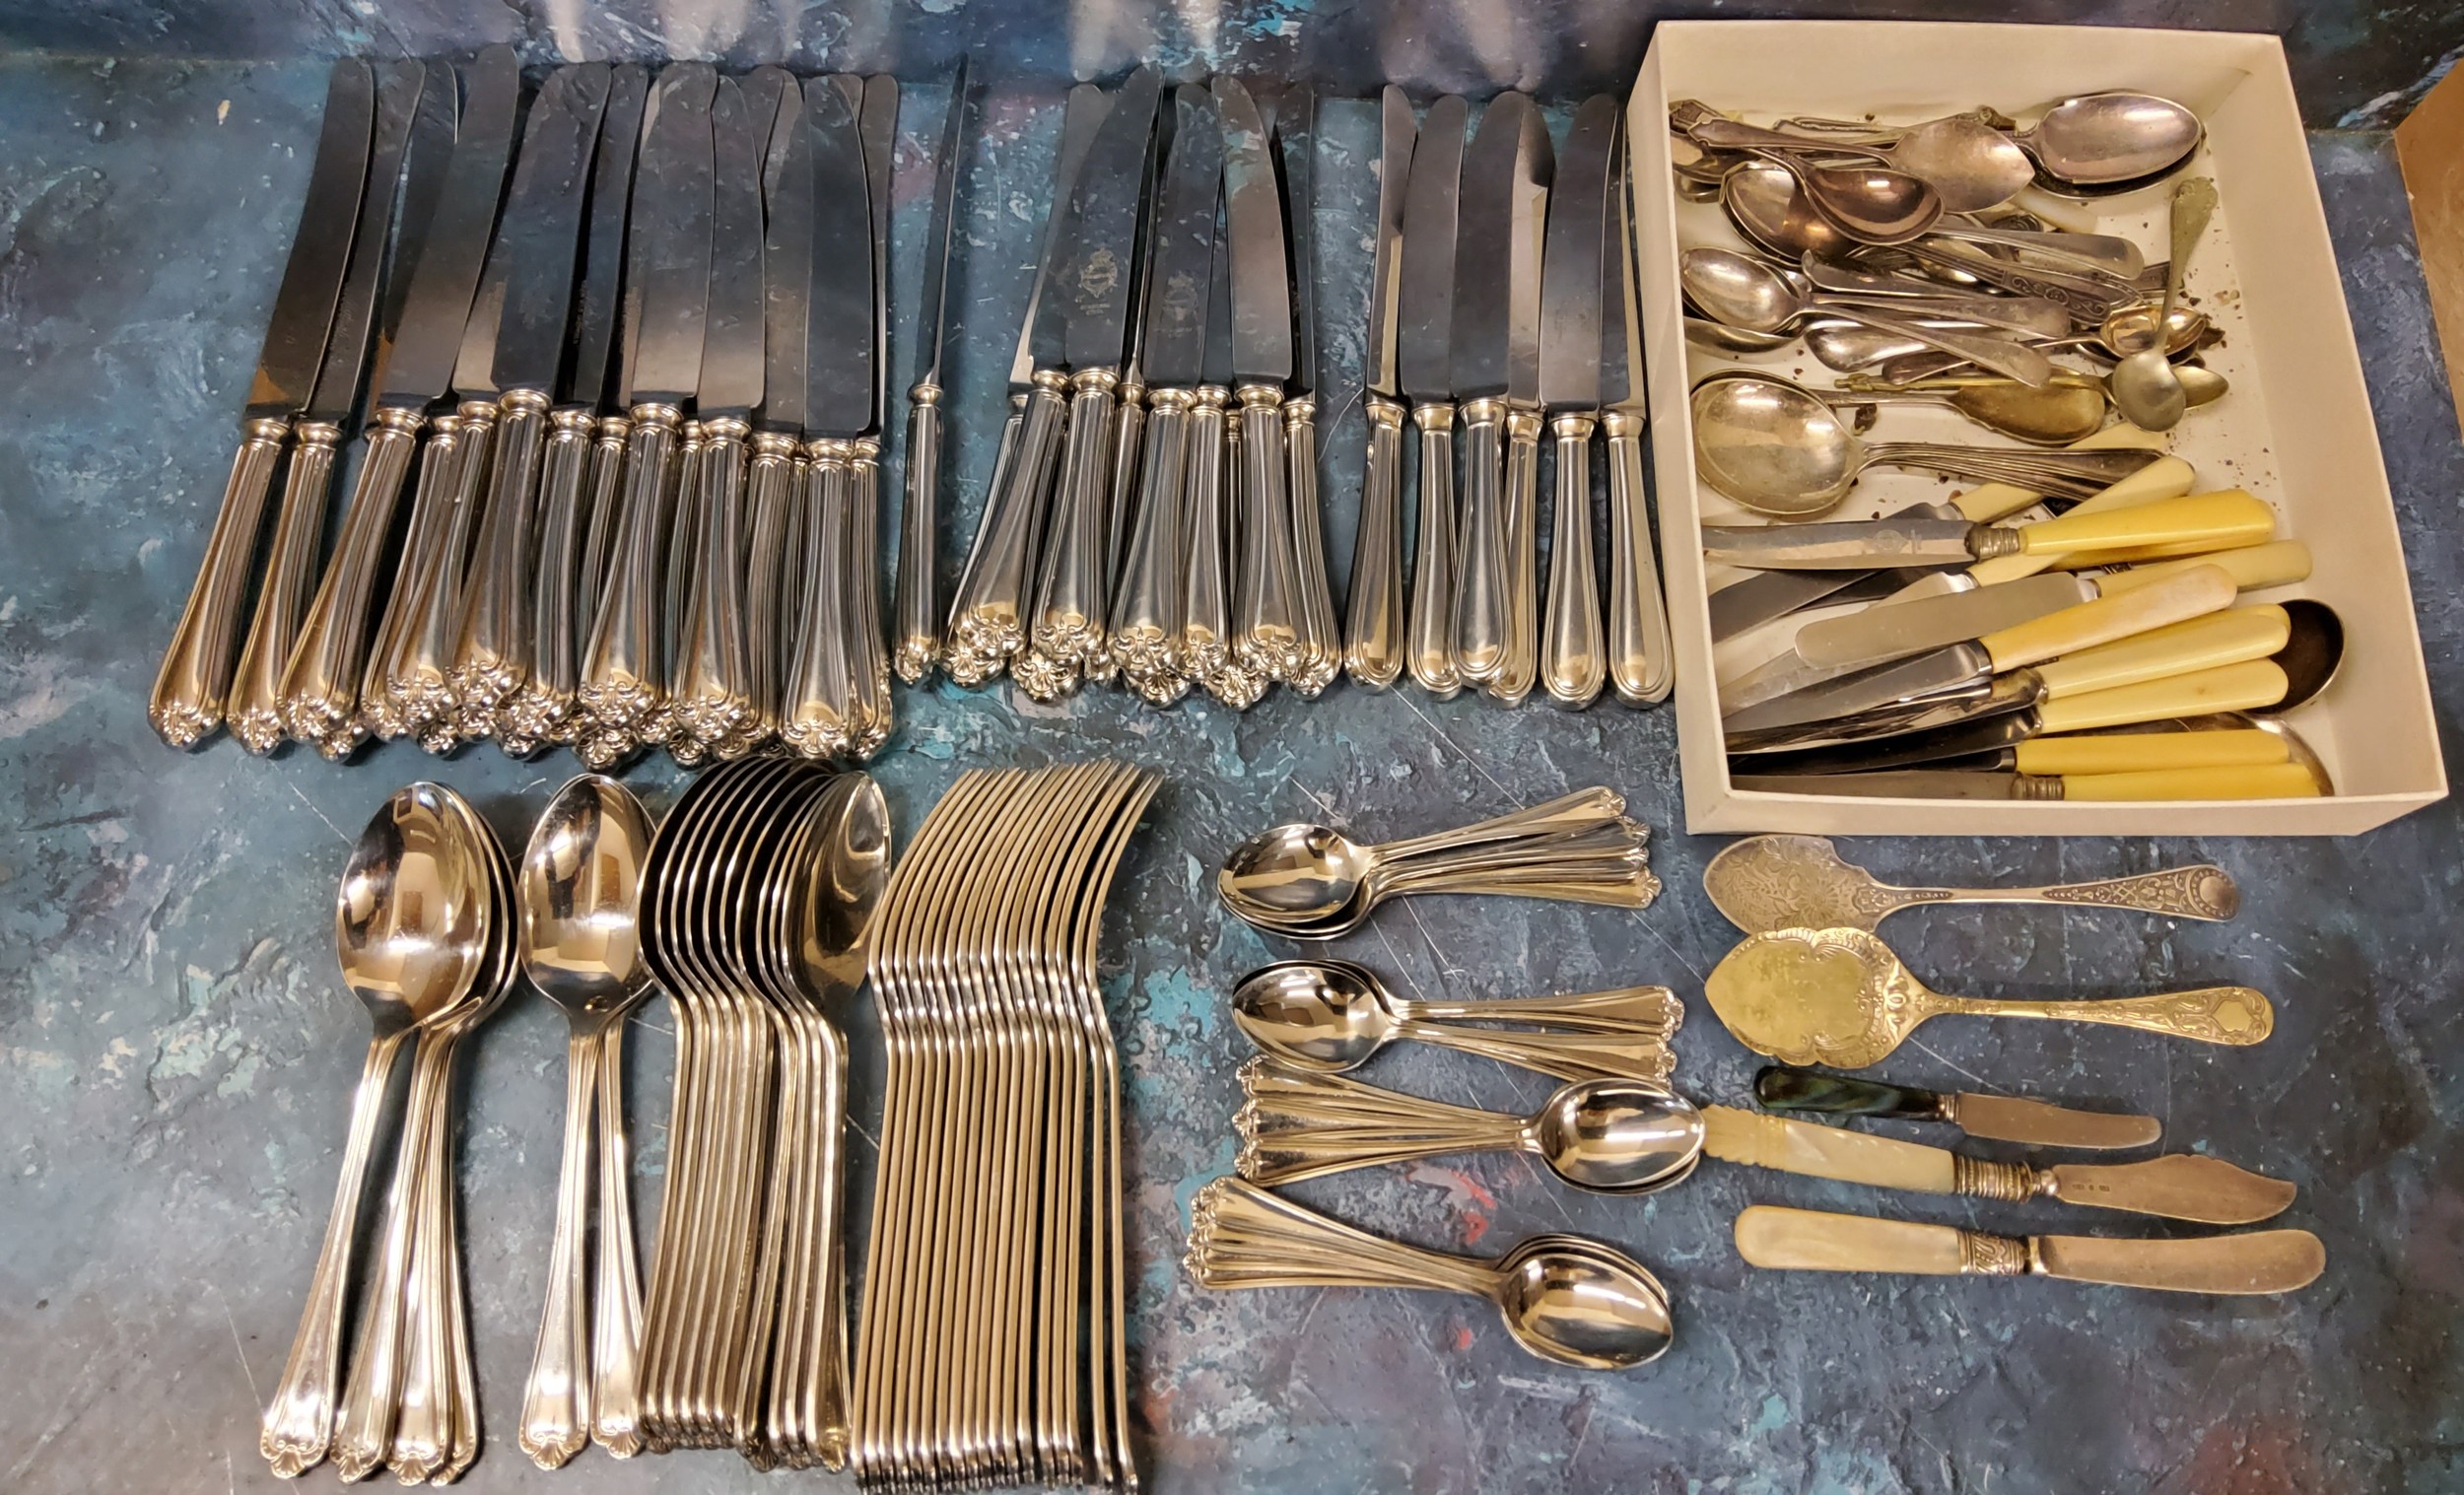 Flatware - Sheffield knives, forks, spoons;  etc